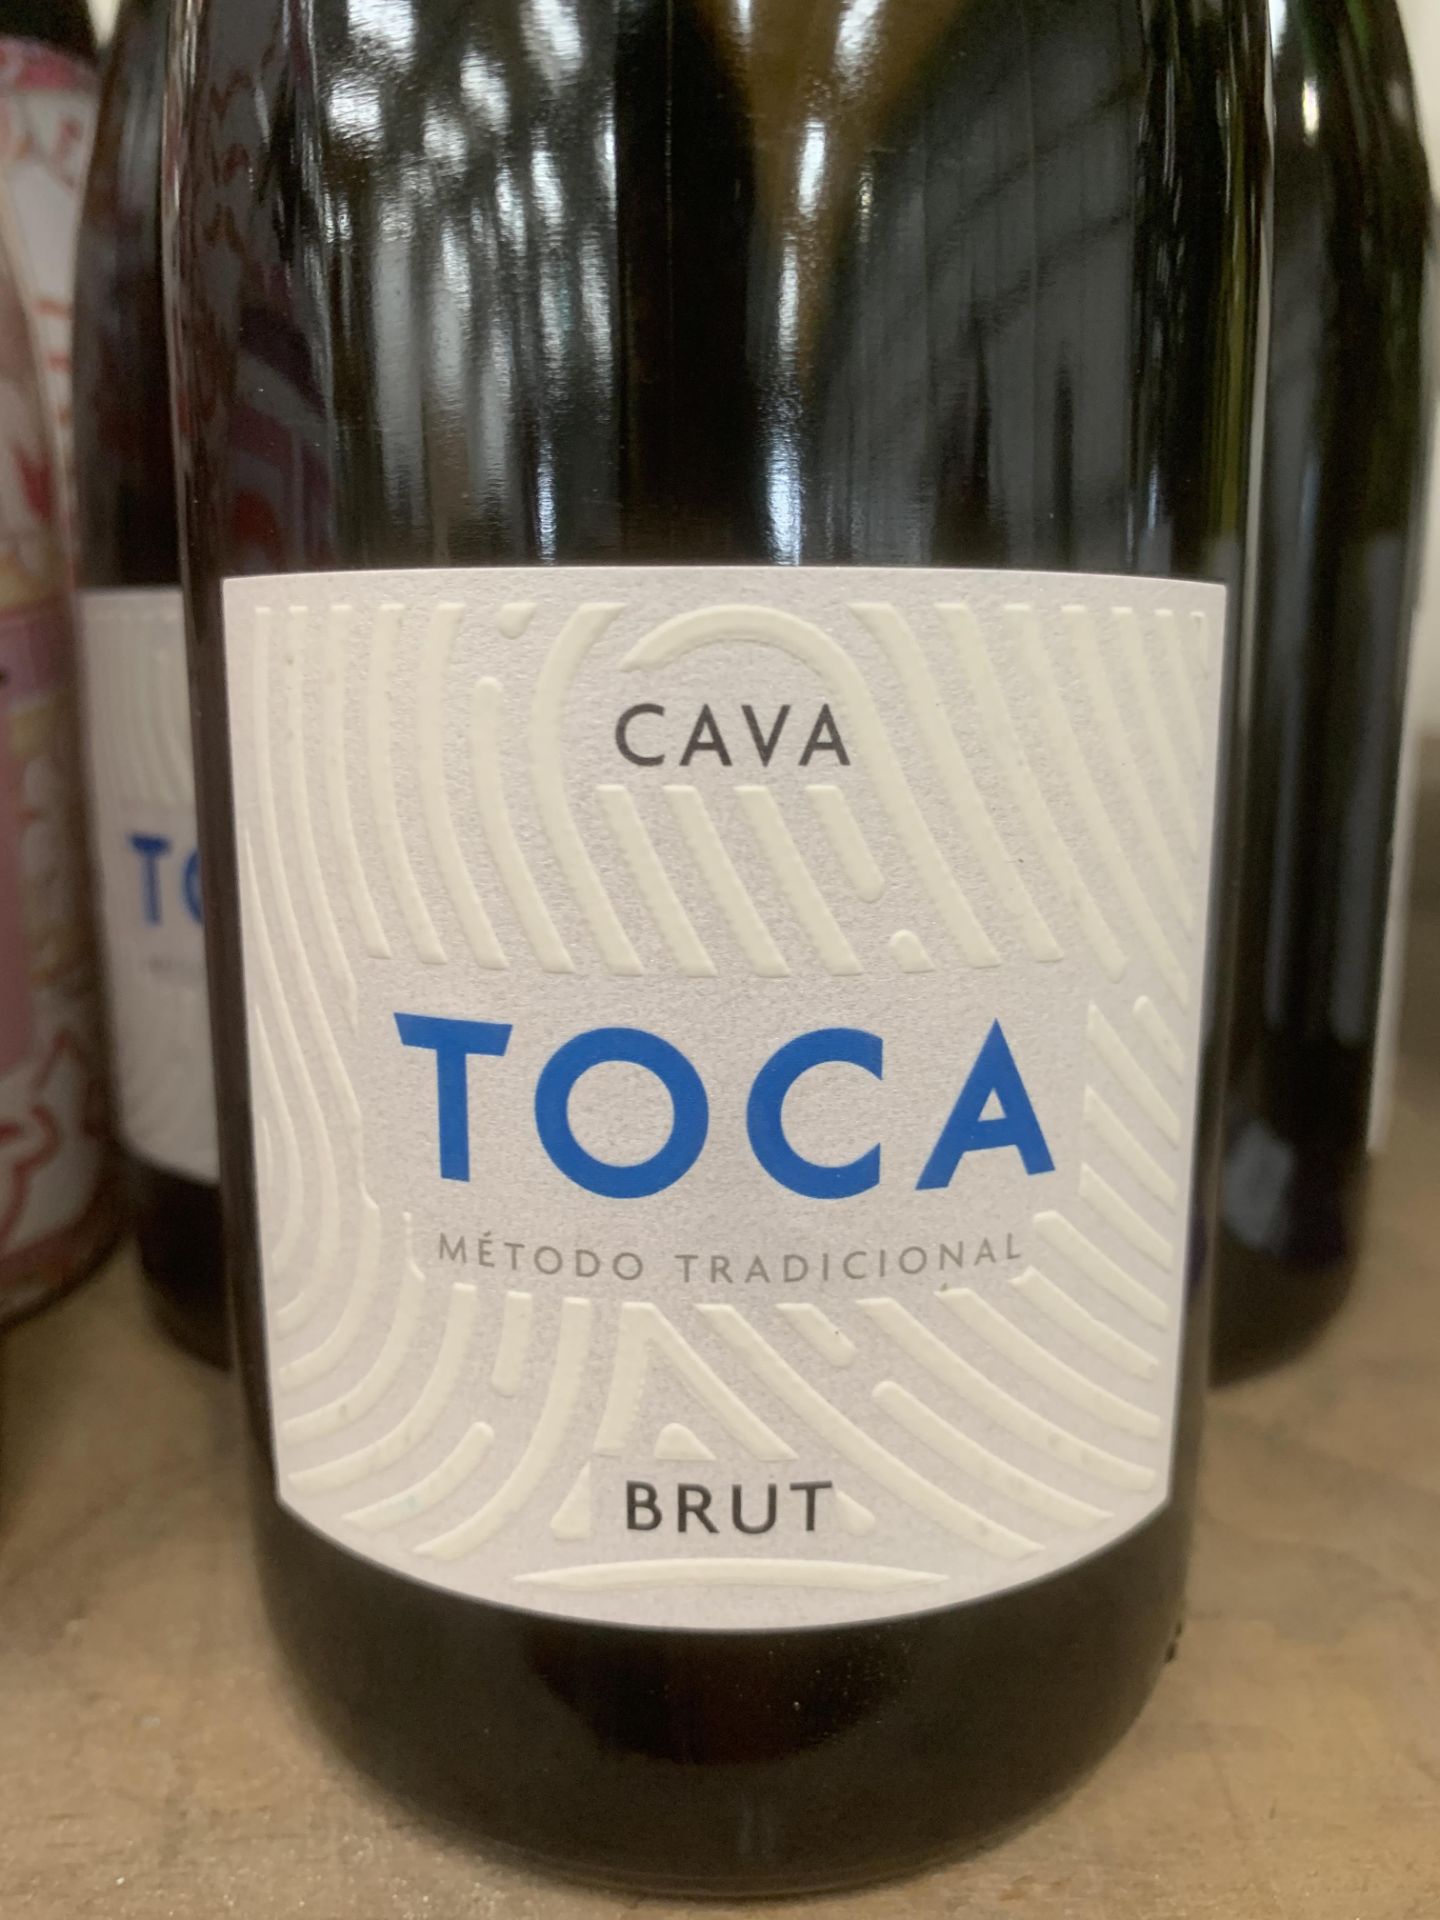 8x Bottles of Cava - 5x Toca, 3x Vilarnau - Image 5 of 5